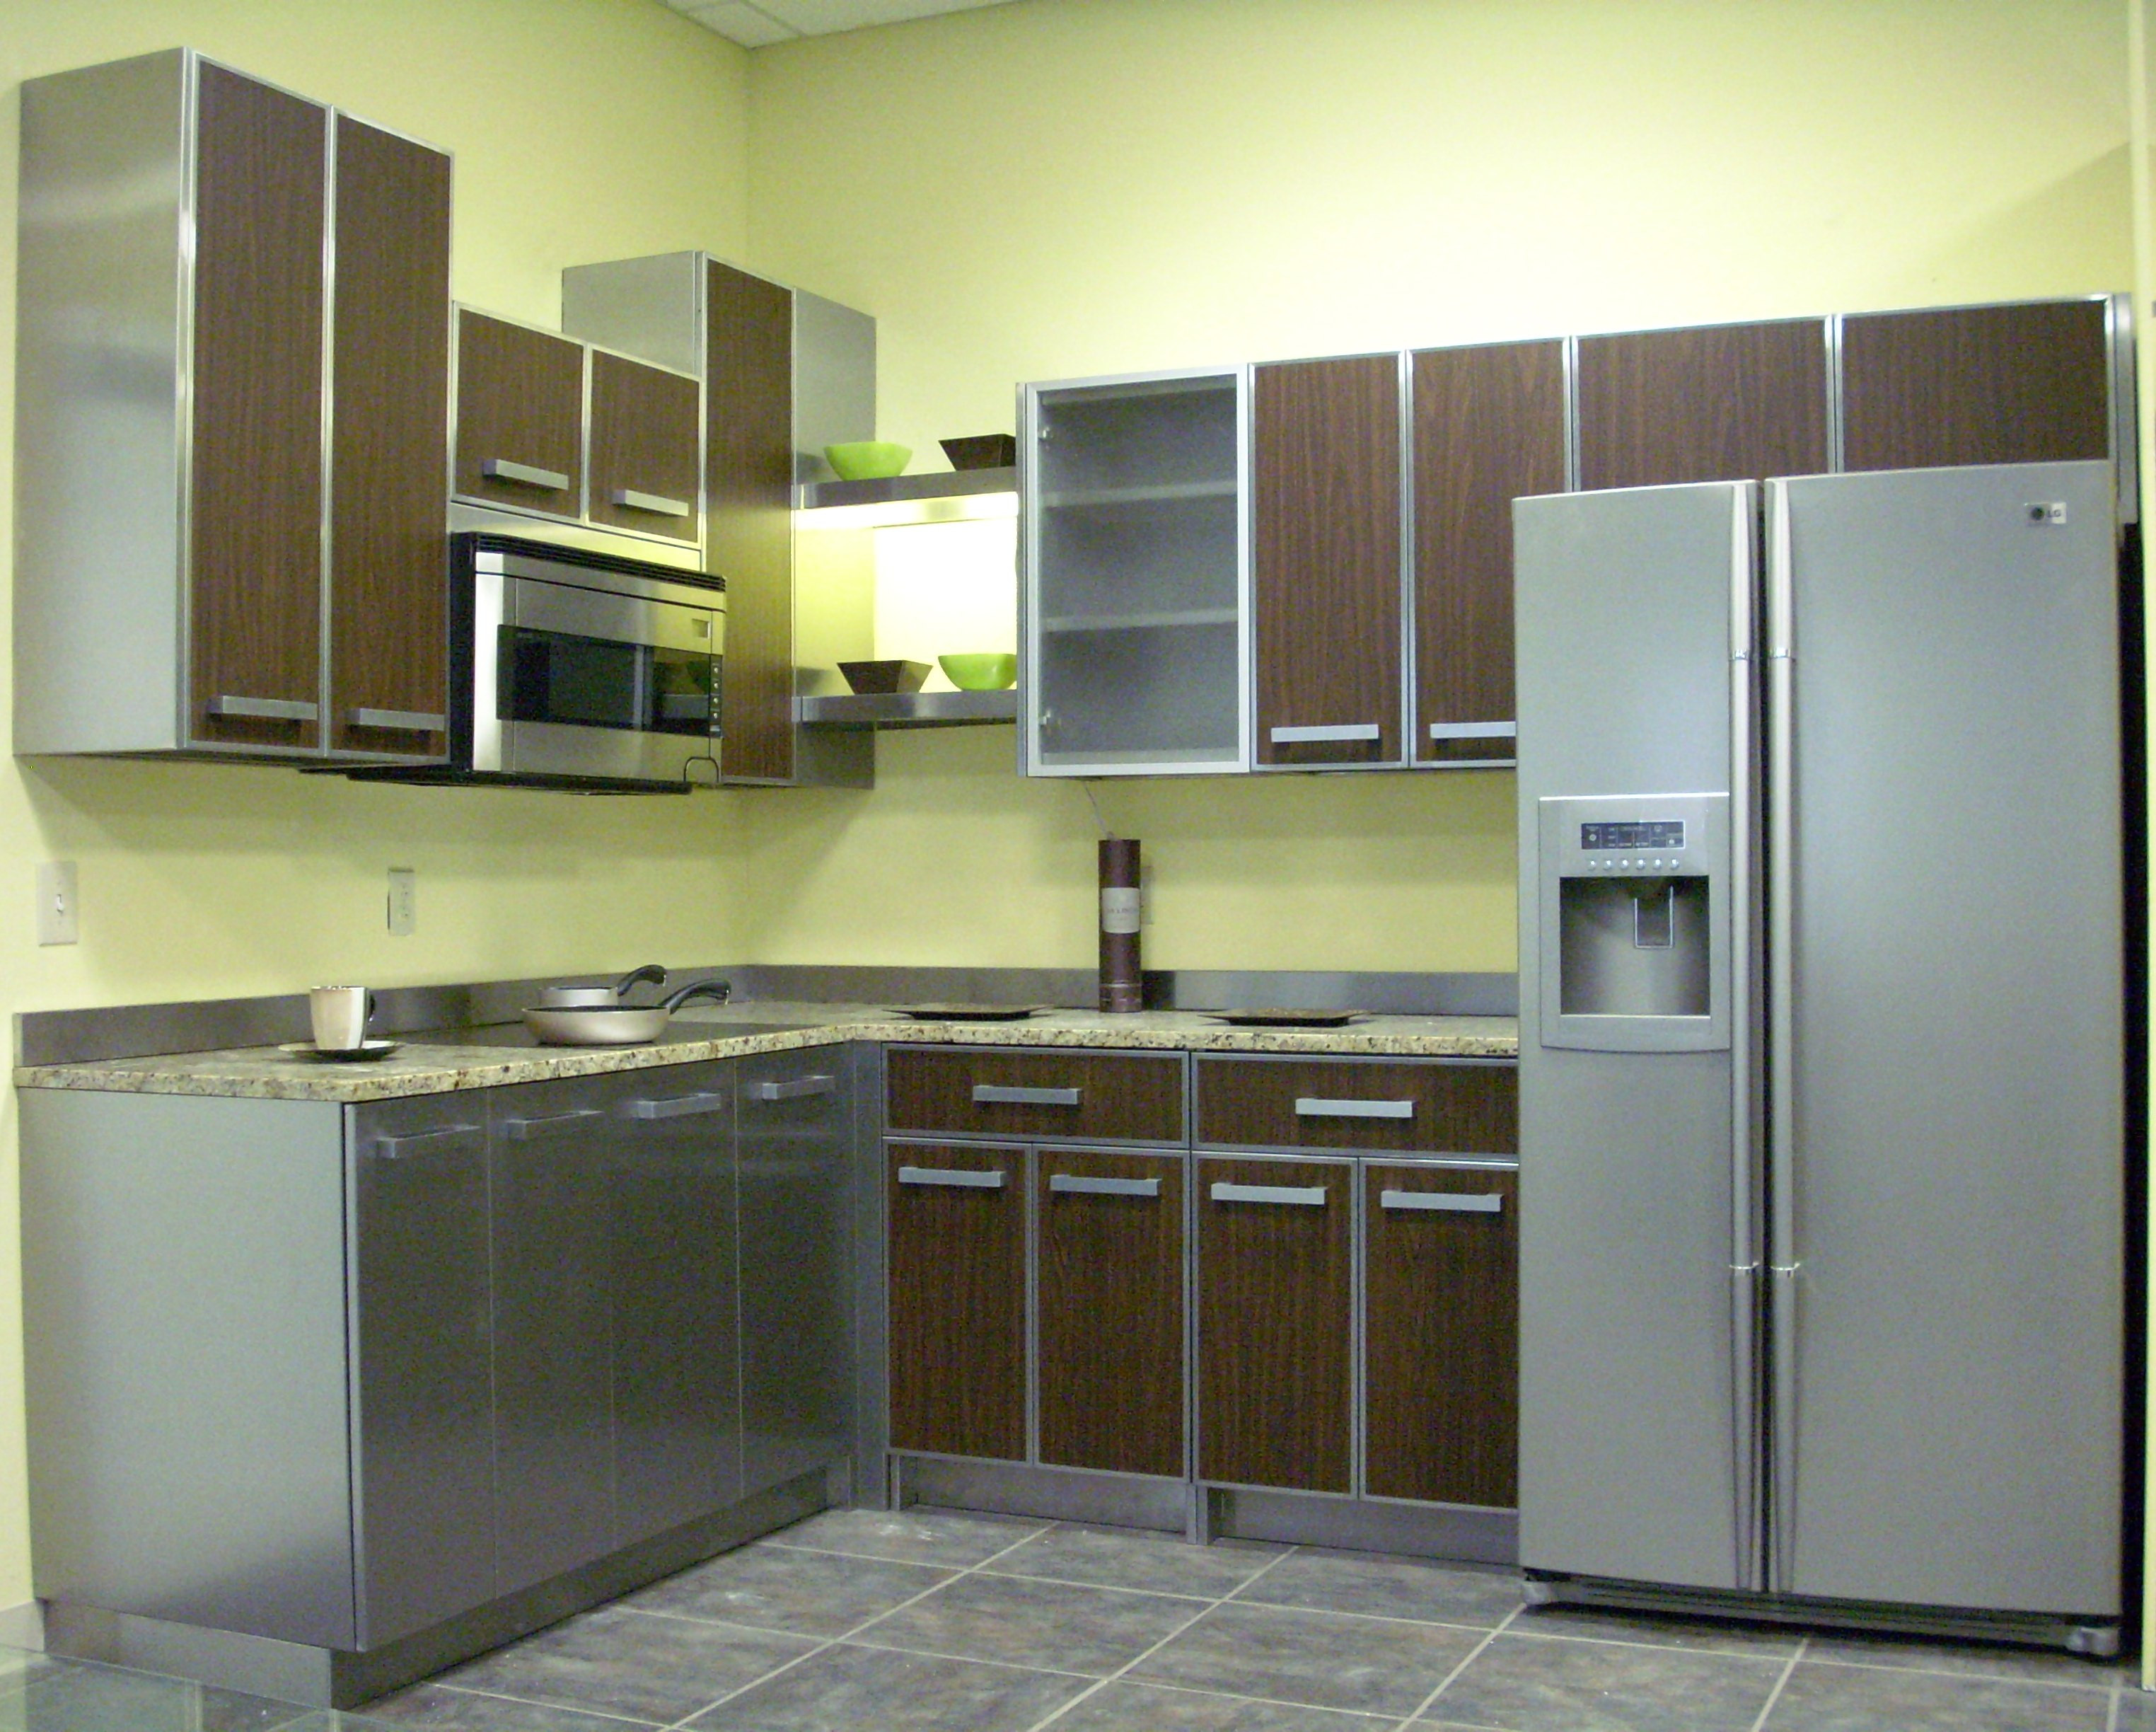 Best ideas about Stainless Steel Kitchen Cabinets
. Save or Pin Stainless Steel Kitchen Cabinets Now.